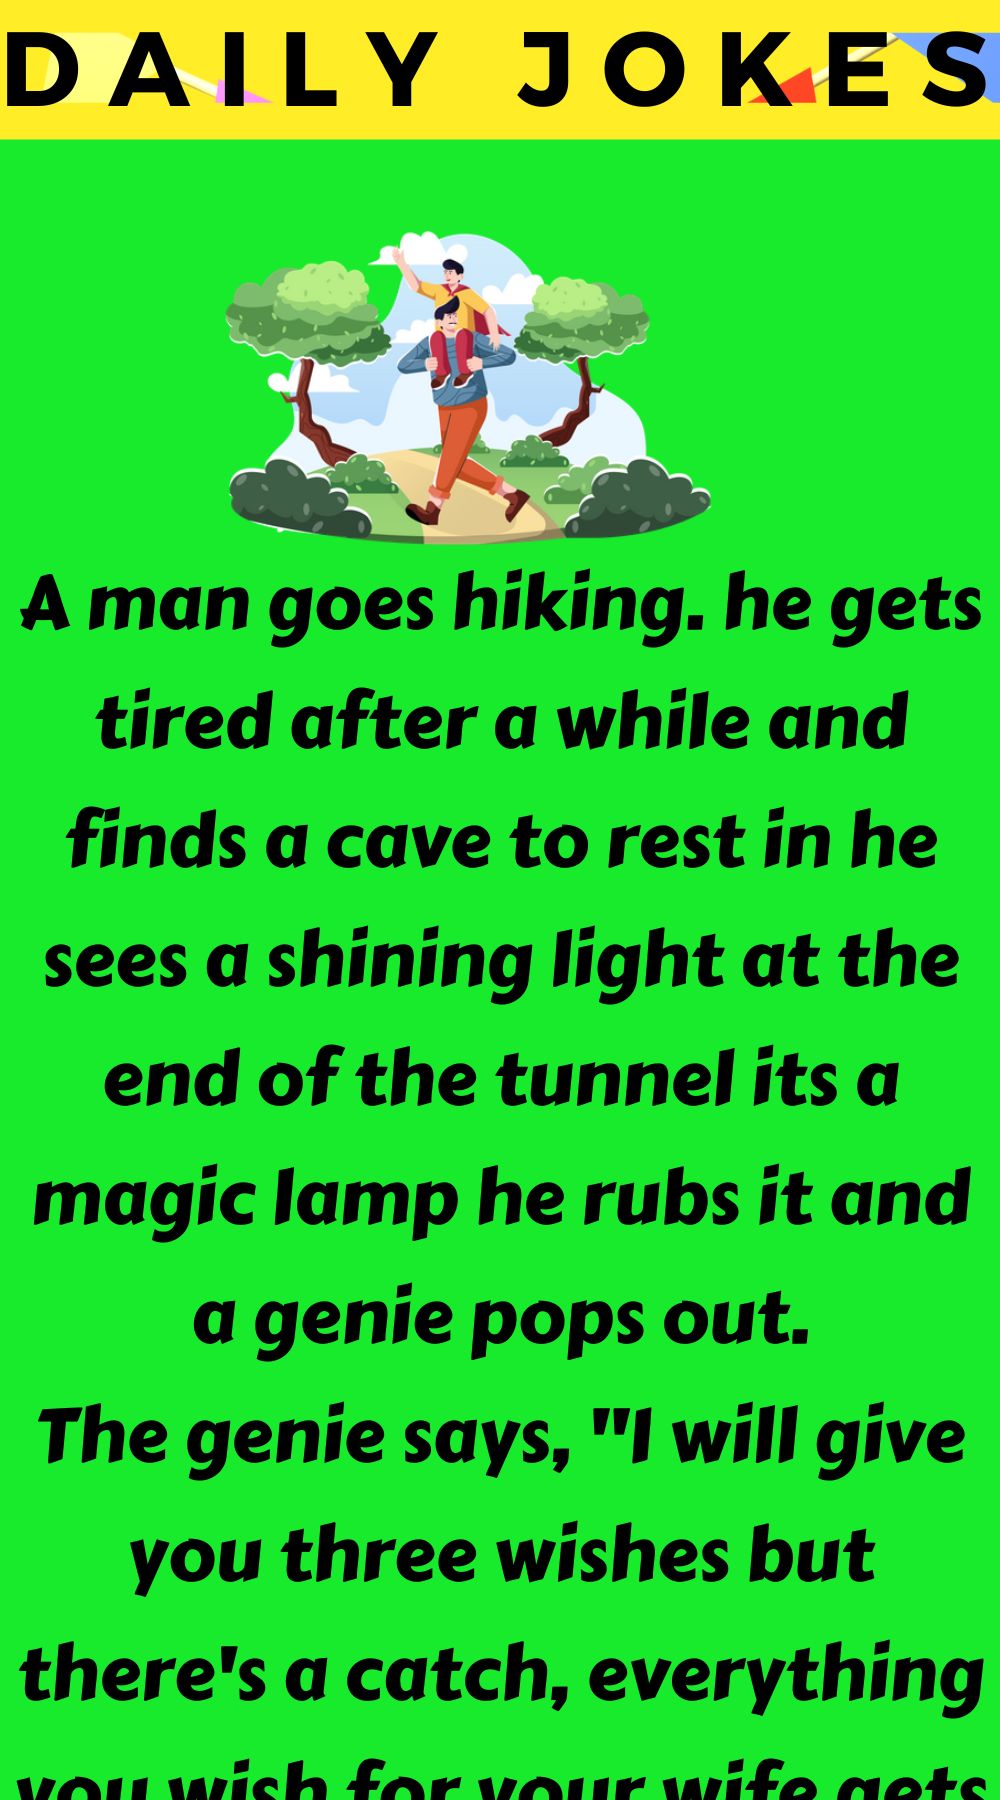 A man goes hiking